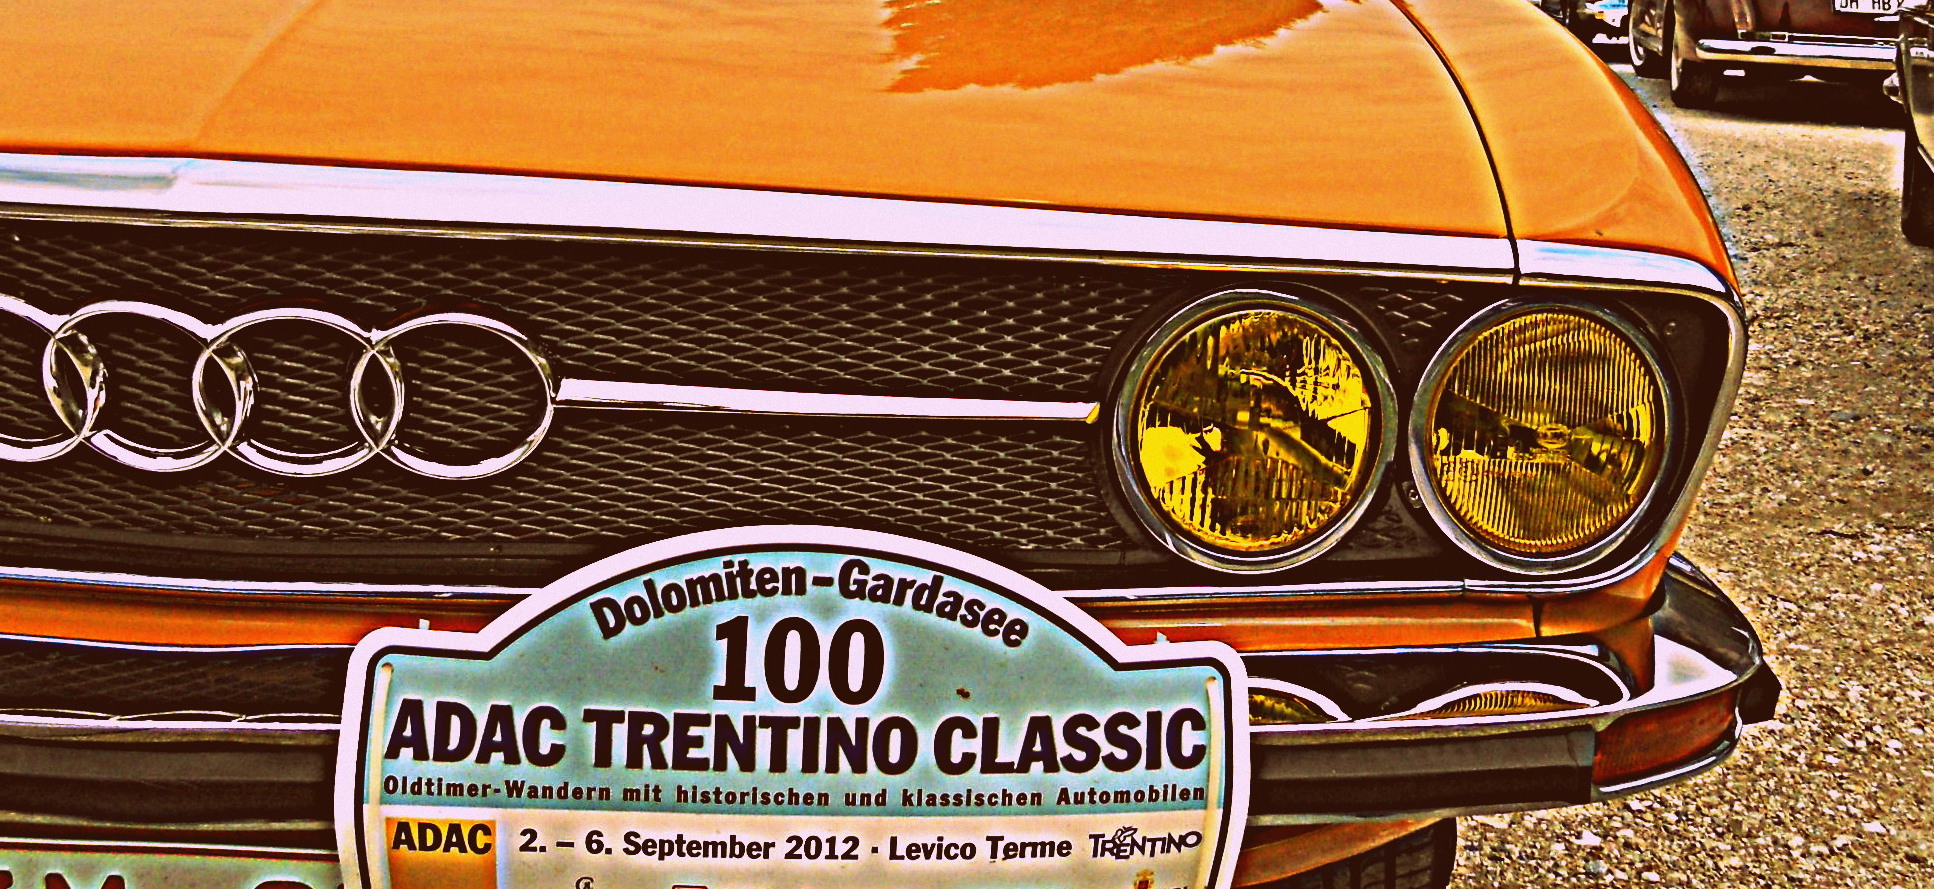 Tuningsuche.de – Bericht zur ADAC Trentino Classic 2012